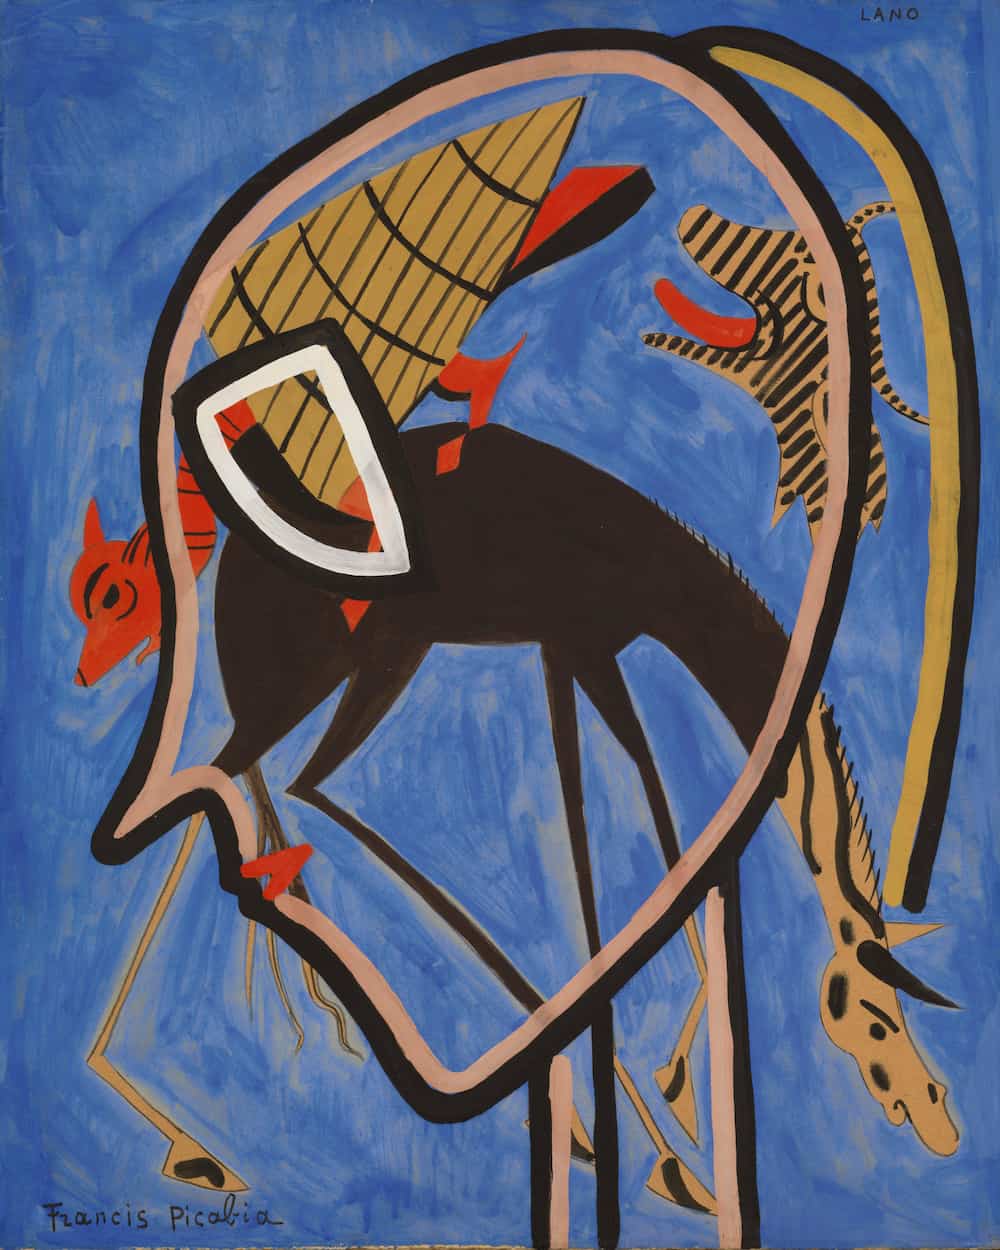 Lano, Francis Picabia